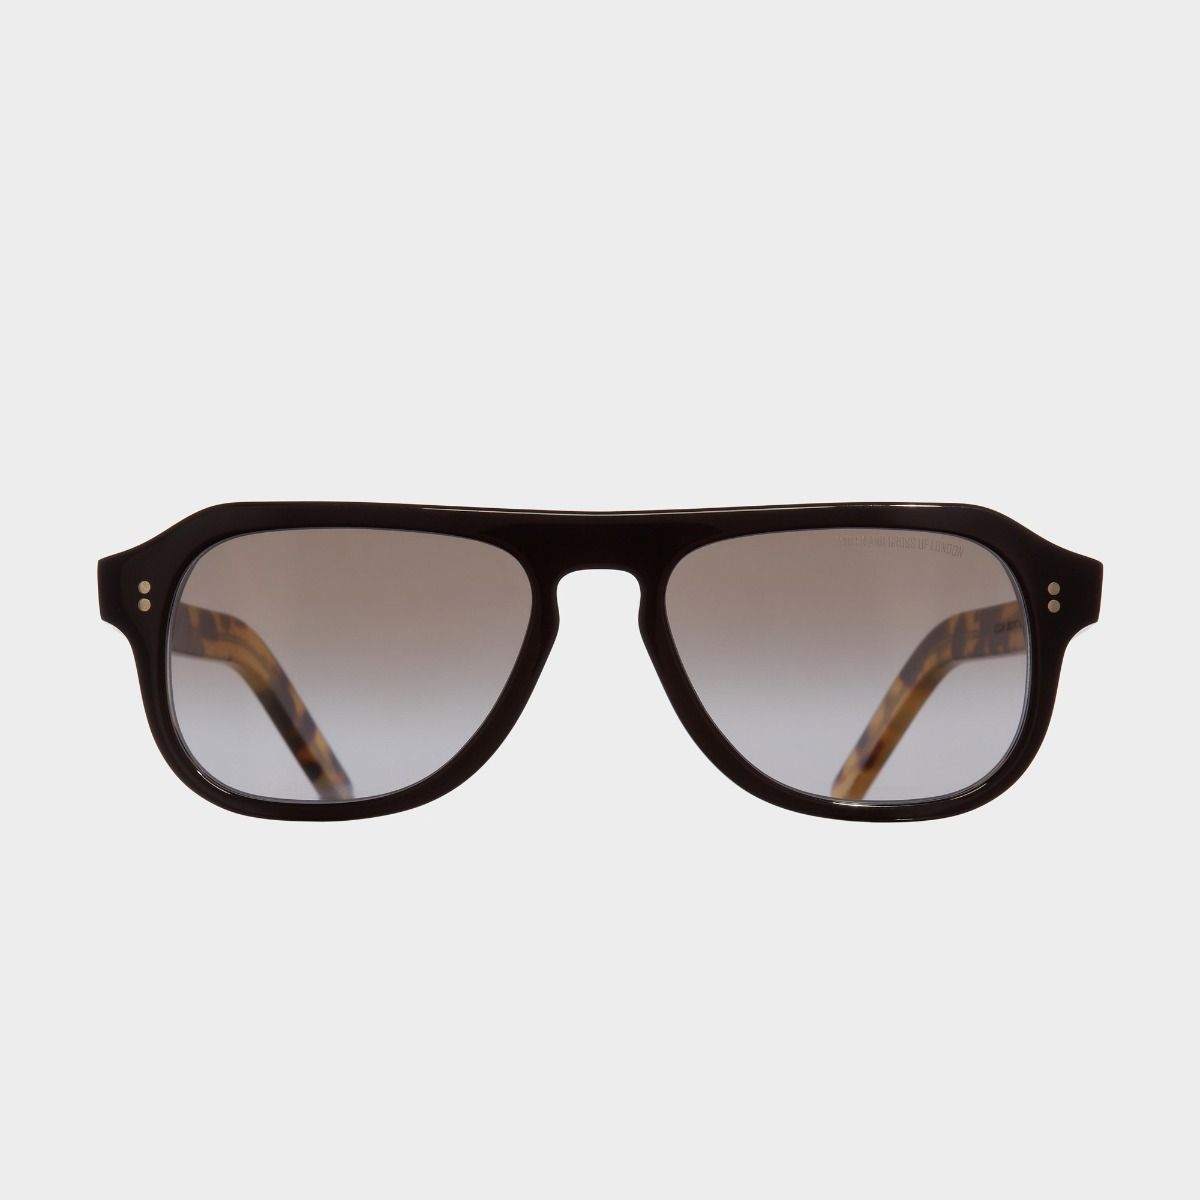 0822V2 Aviator Sunglasses-Black on Camo